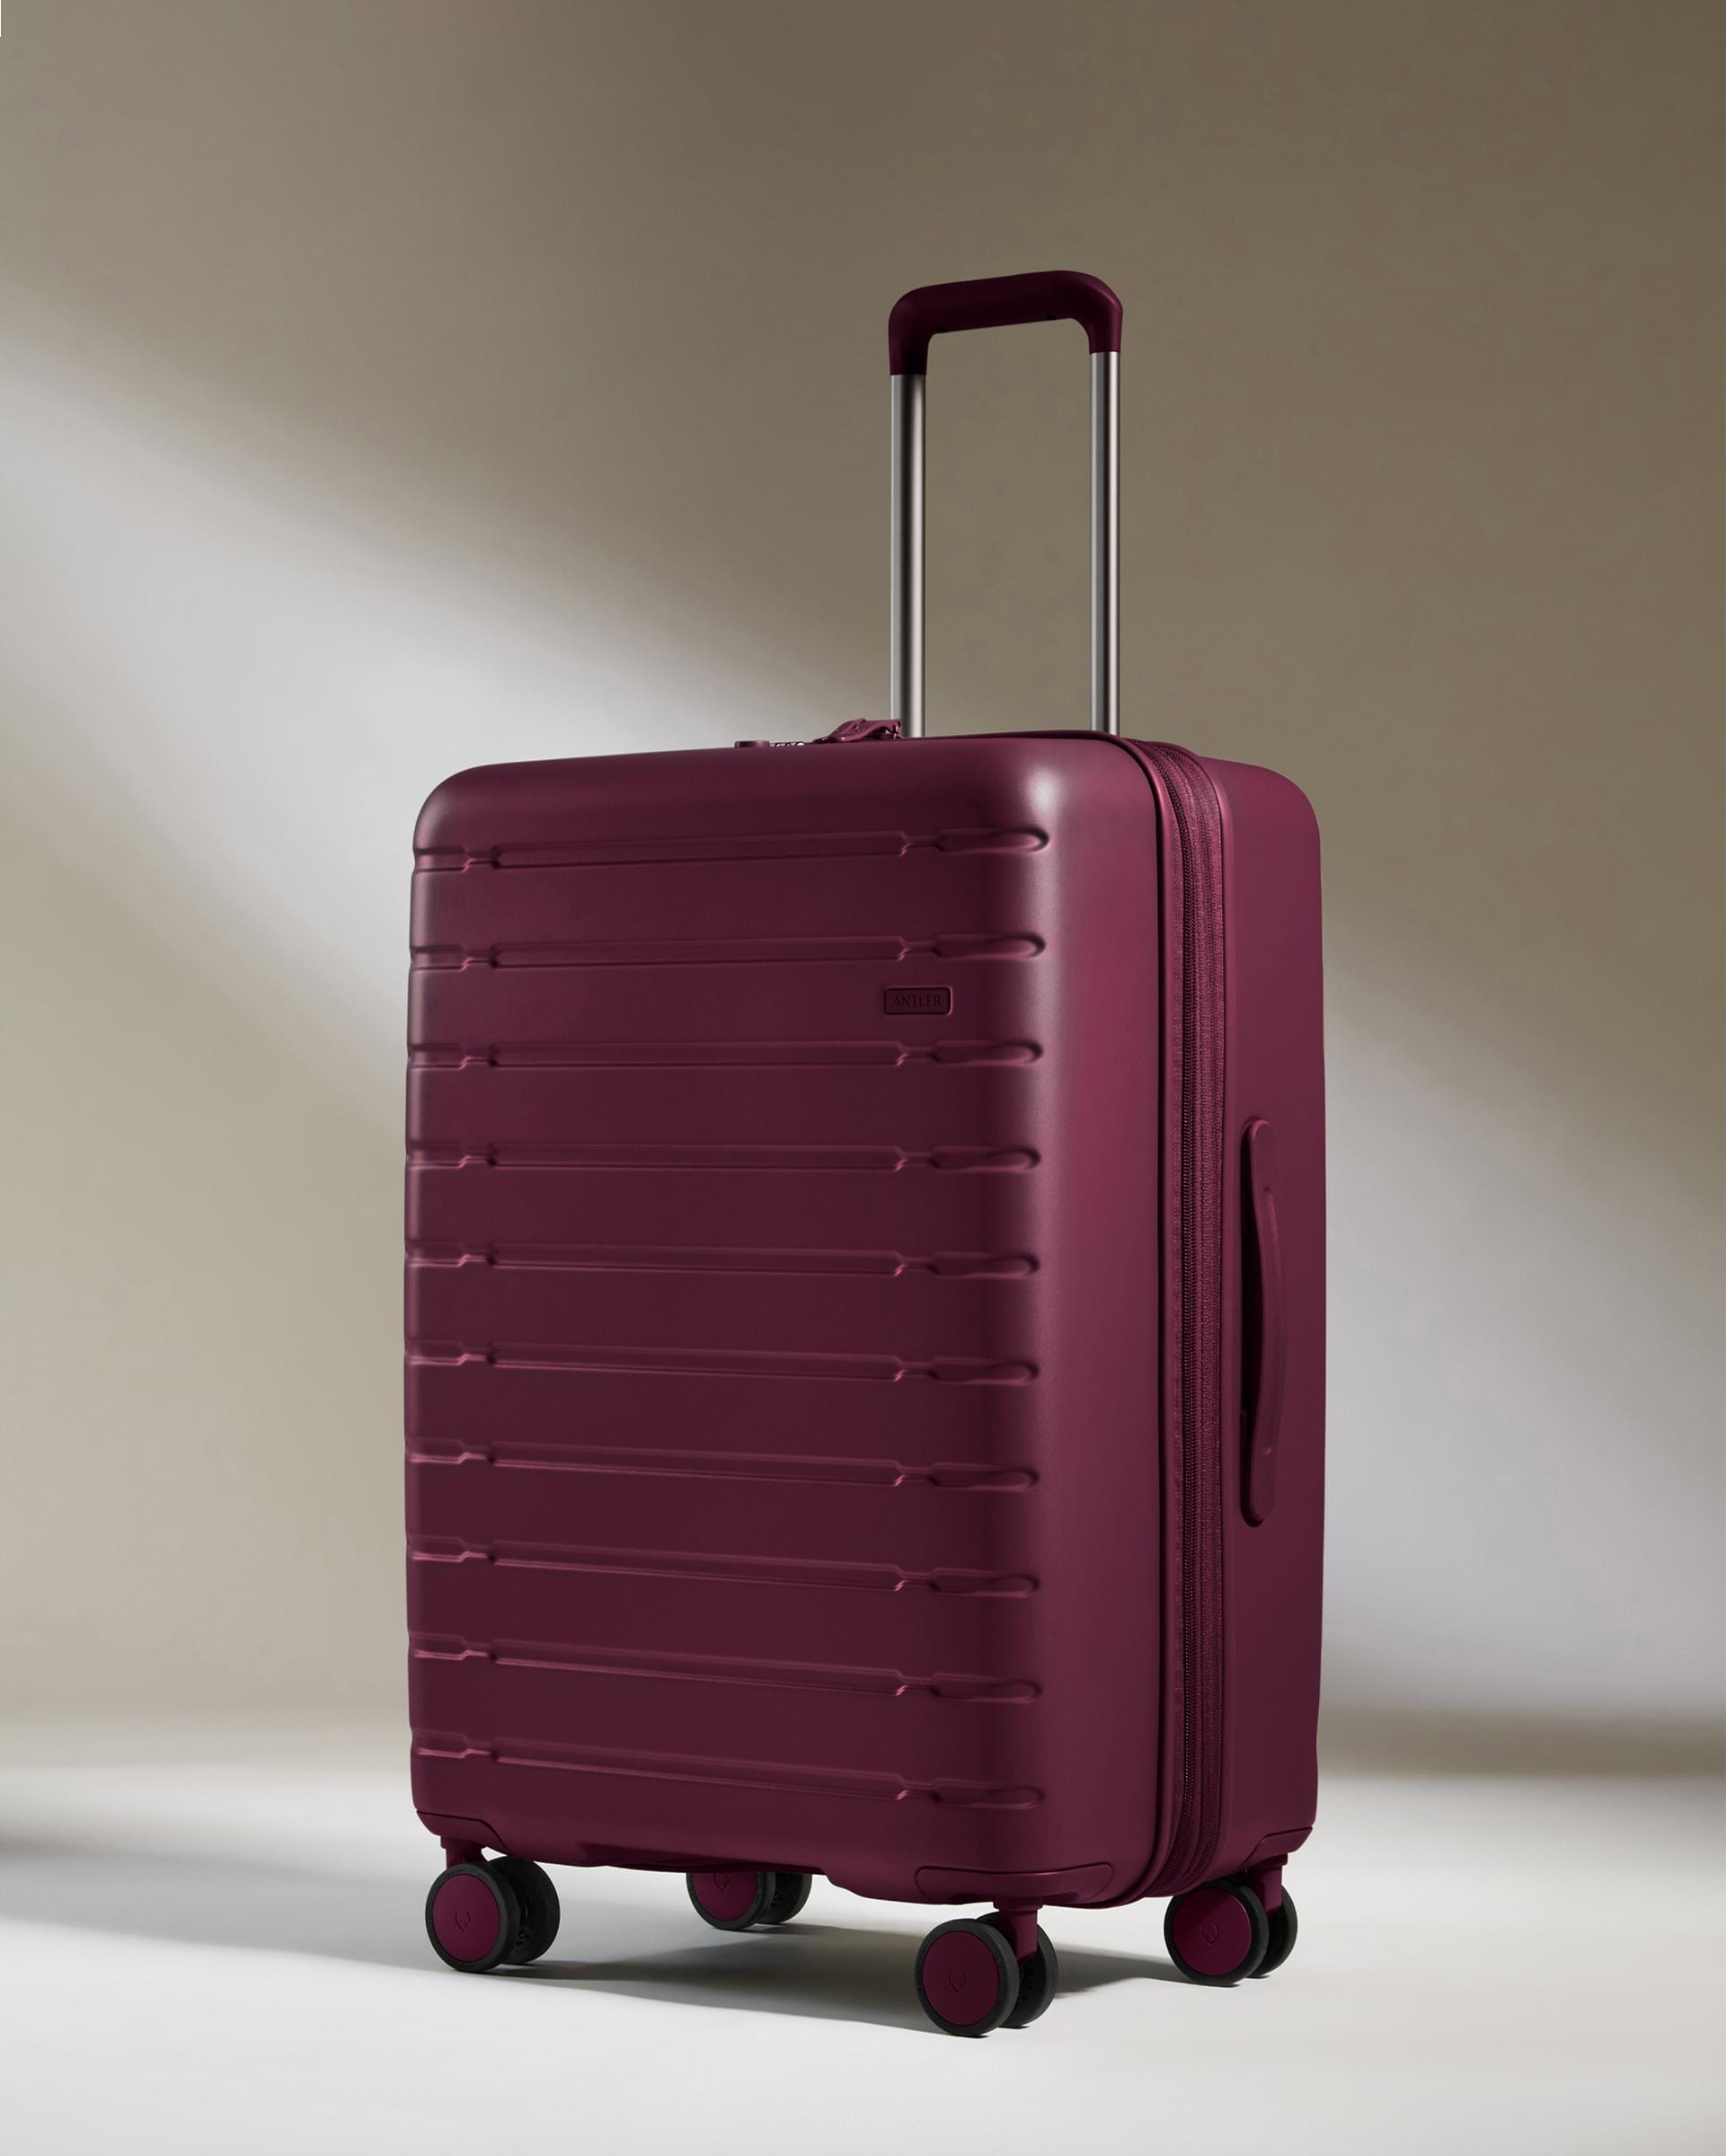 Antler Luggage -  Stamford 2.0 medium in berry red - Hard Suitcases Stamford 2.0 Medium Suitcase Red | Hard Luggage 